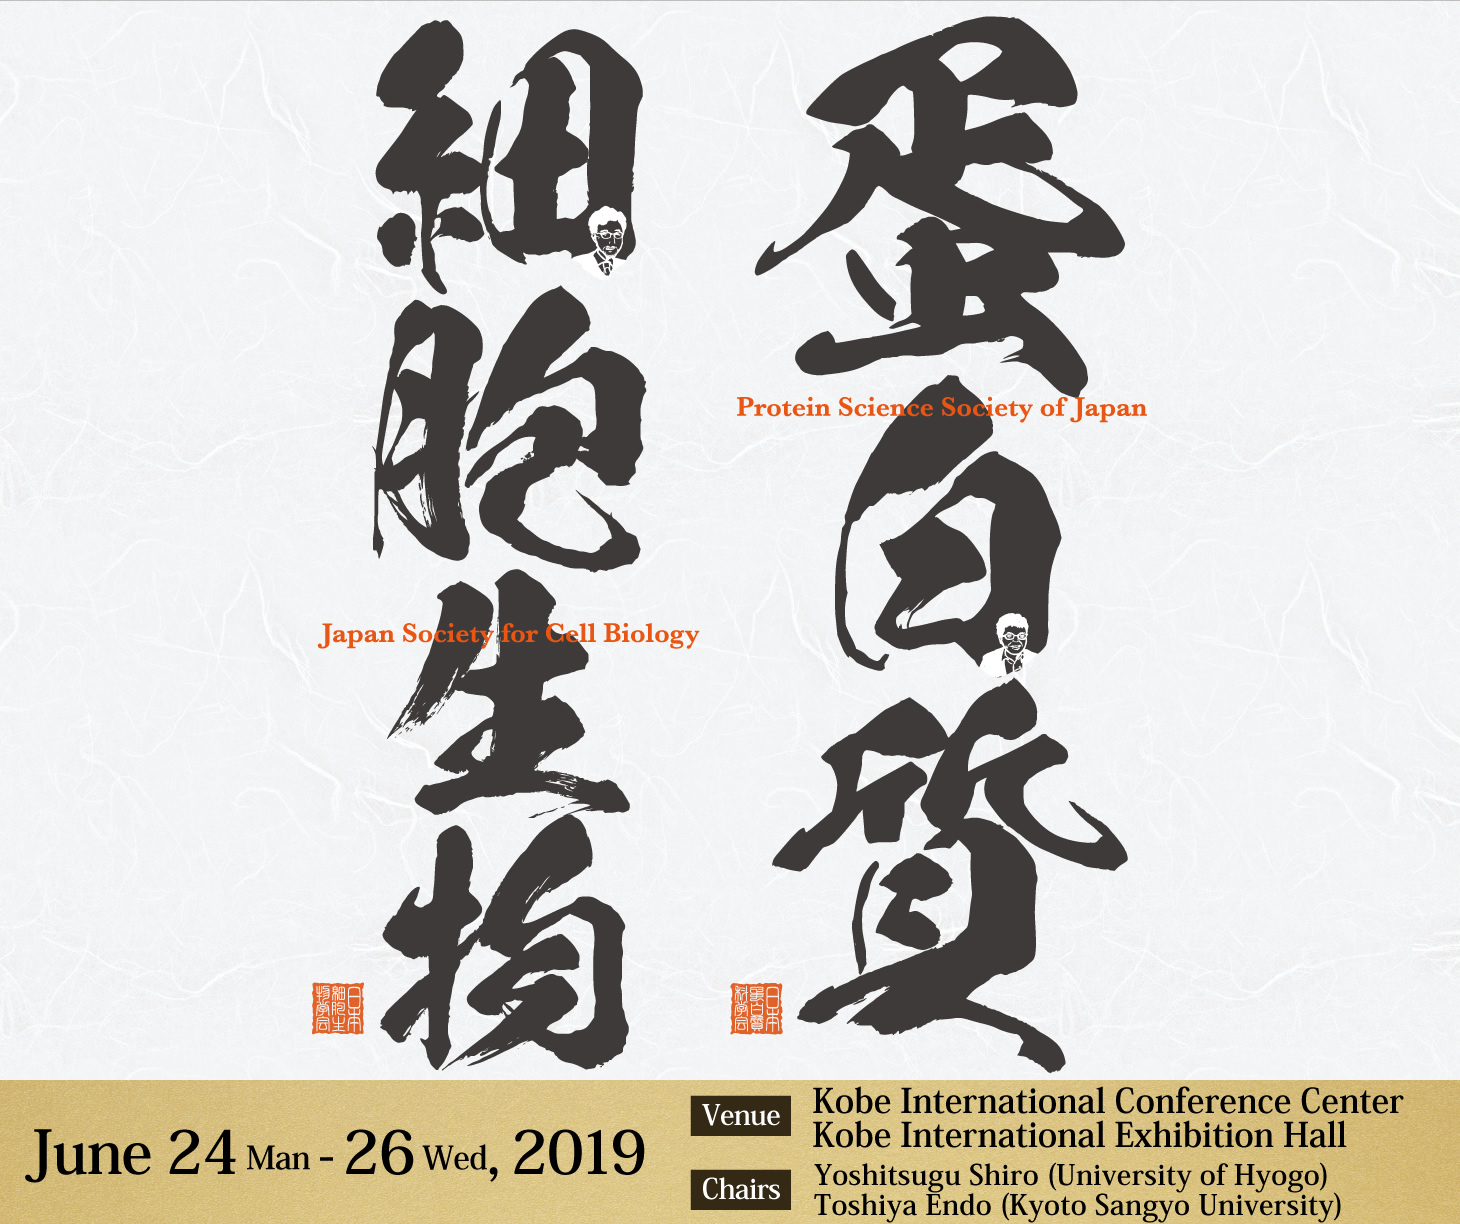 June 24 Man - 26 Wed, 2019
Venue : Kobe International Conference Center, Kobe International Exhibition Hall
Chairs : Yoshitsugu Shiro(University of Hyogo), Toshiya Endo(Kyoto Sangyo University)